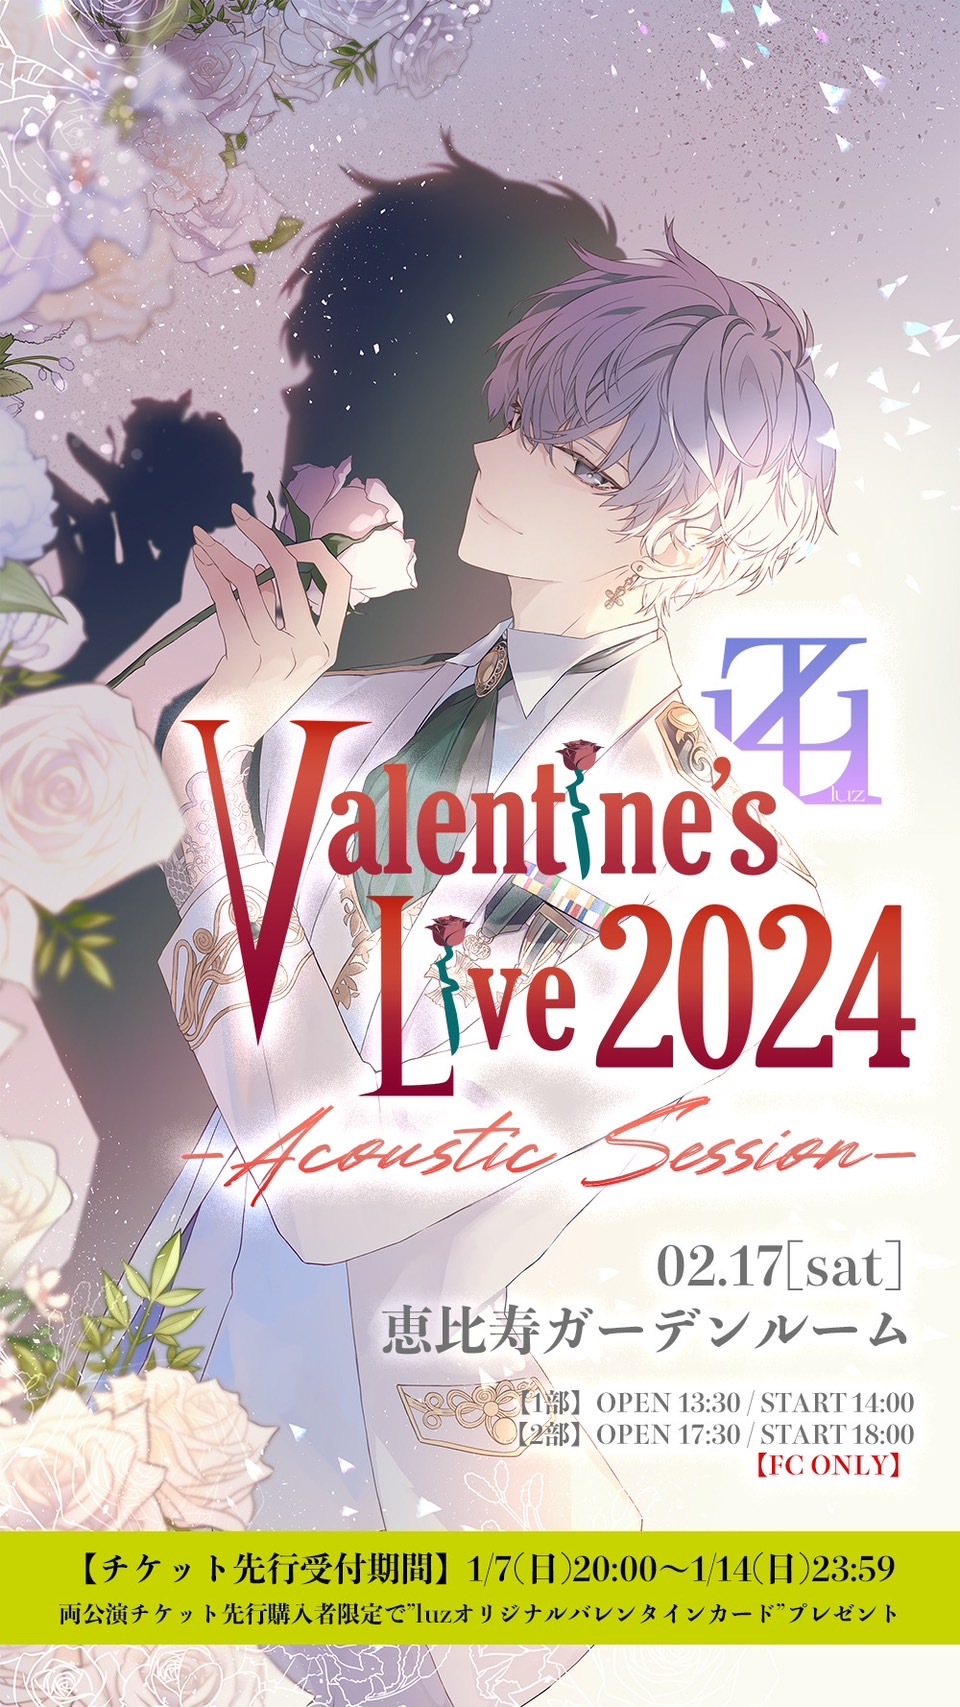 Valentine's Live 2024 - Acoustic Session -